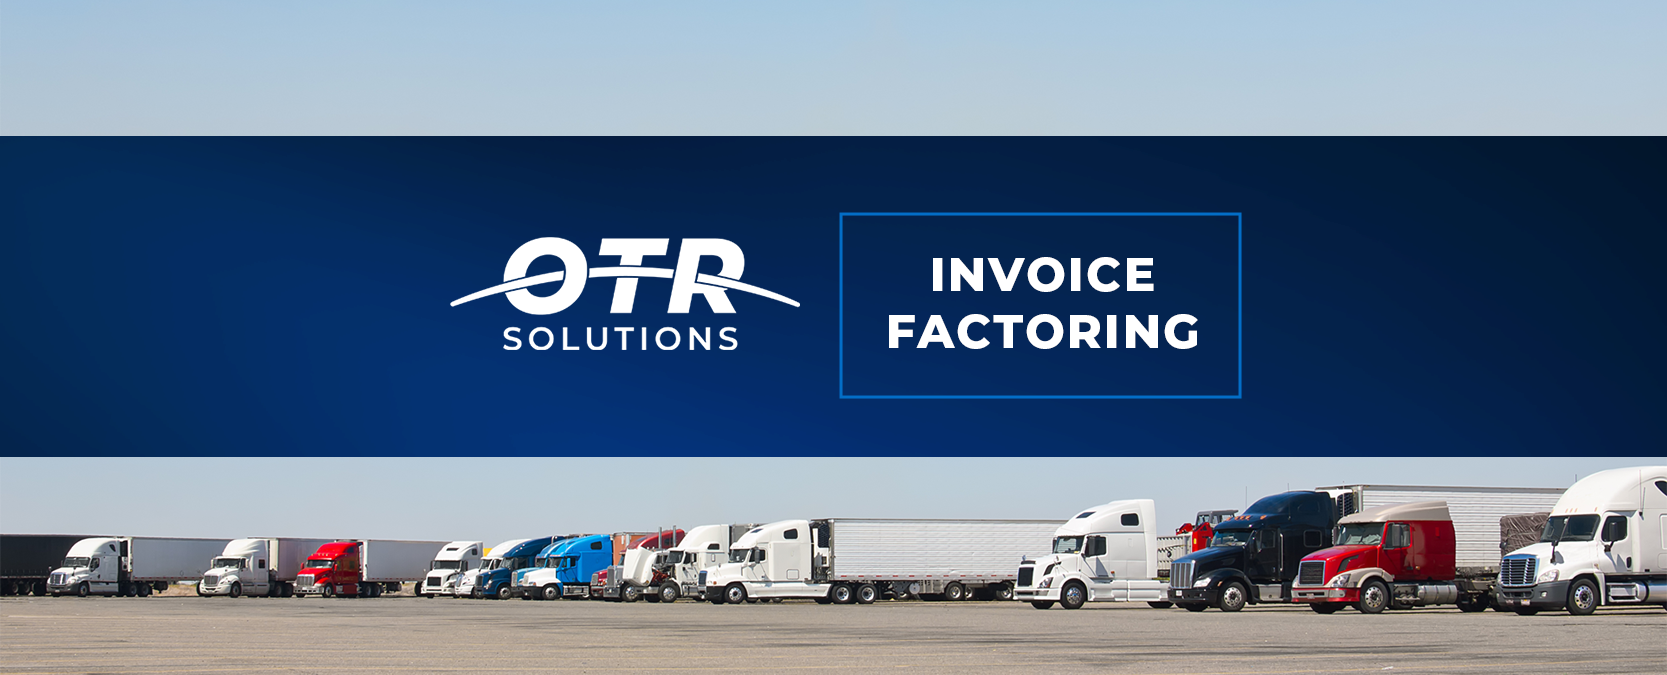 OTR Invoice Factoring